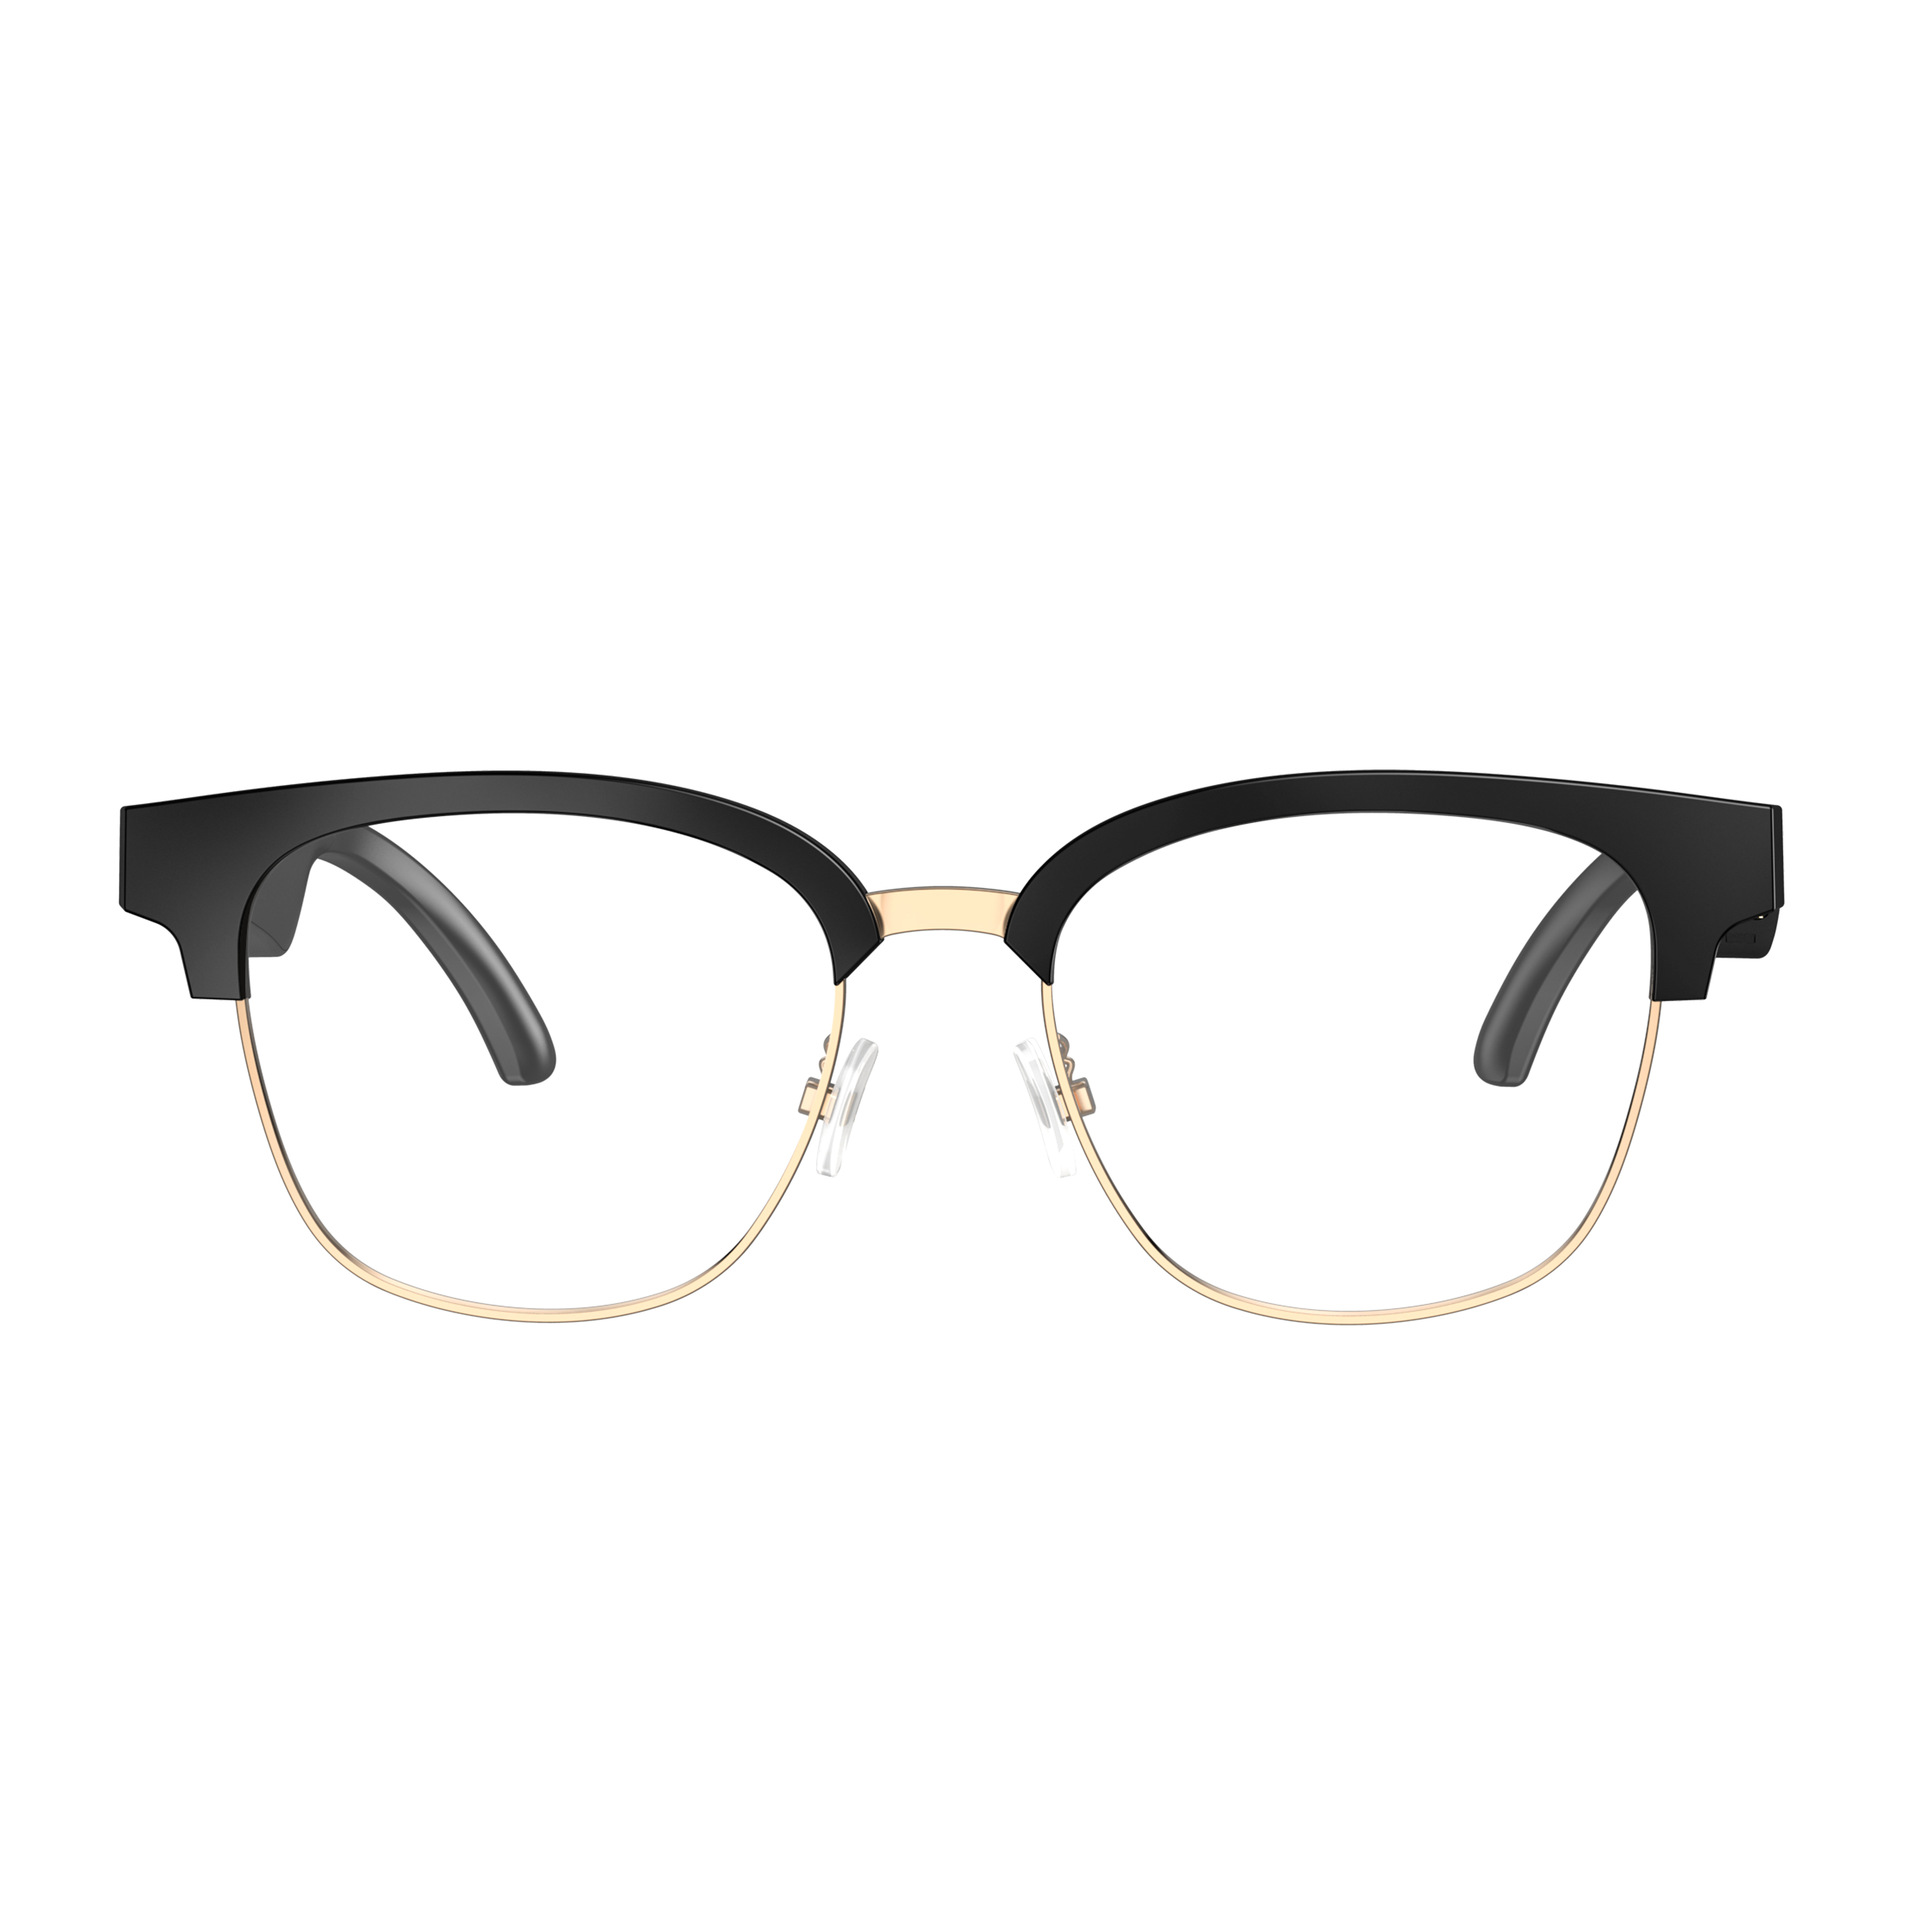 New Sunglasses Vintage Sunglasses Replaceable Optical Lens Smart Glasses Anti-Blue Light Wireless Bluetooth Glasses Tide